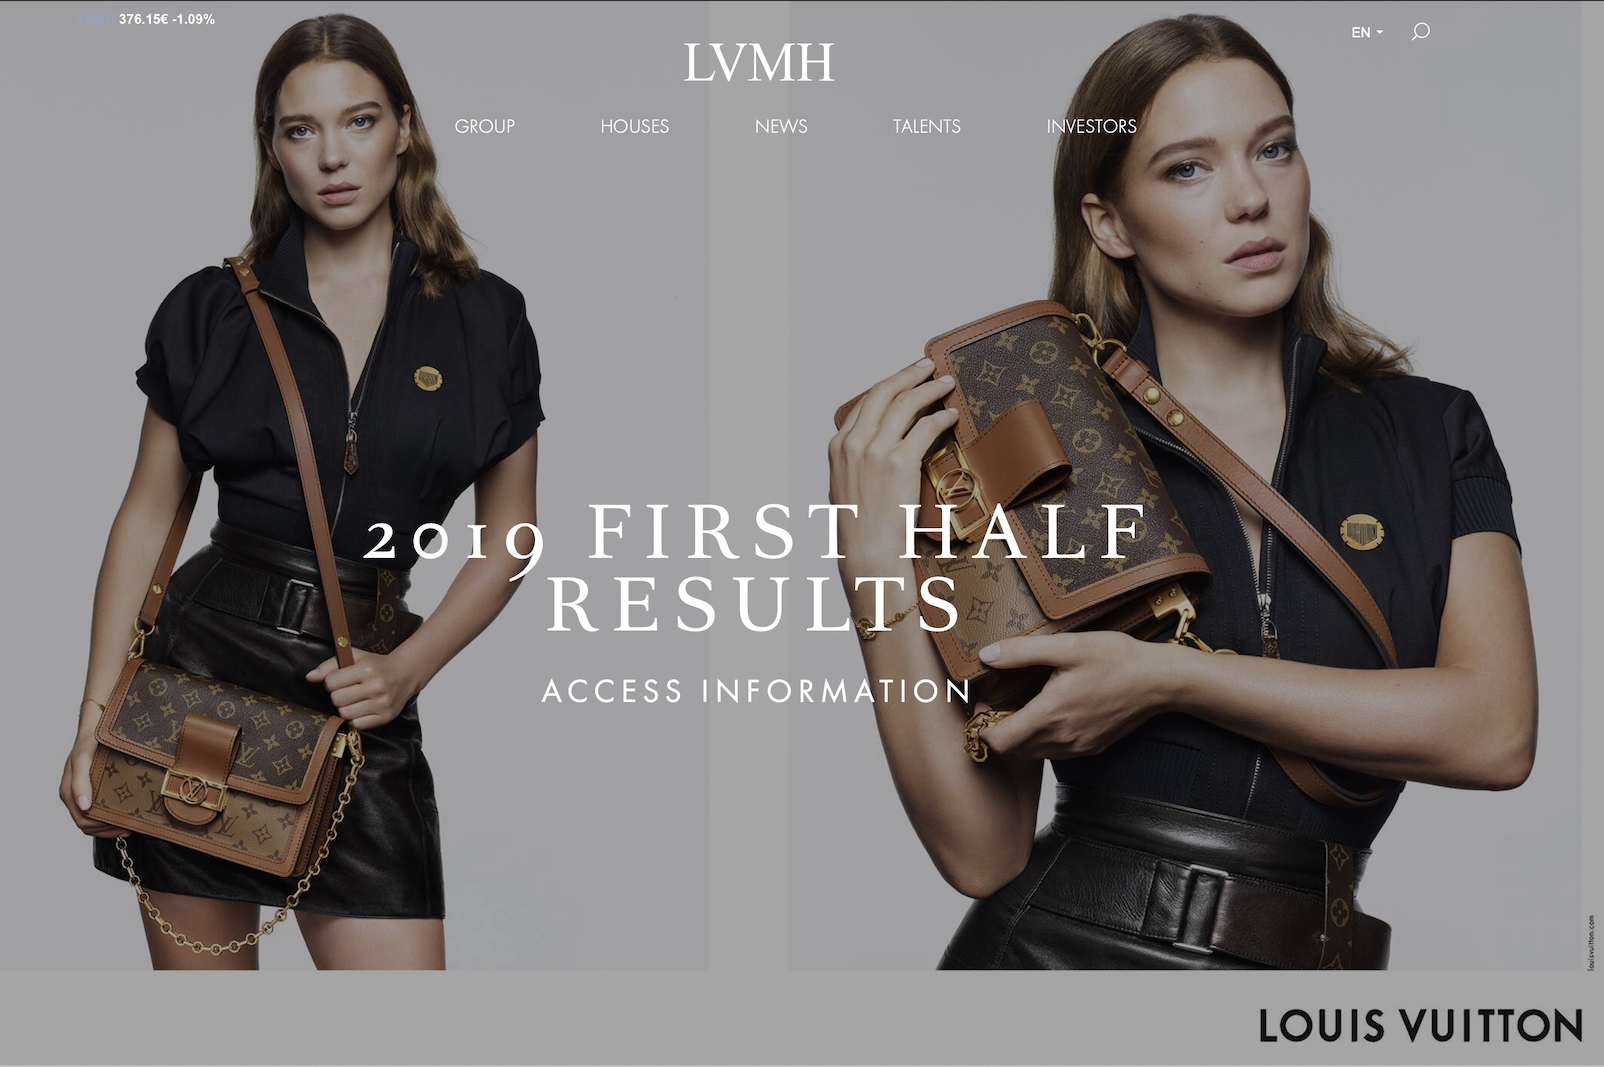 LVMH 集团发布2019上半财年数据： LV、Dior 强劲增长推动整体业绩超出预期